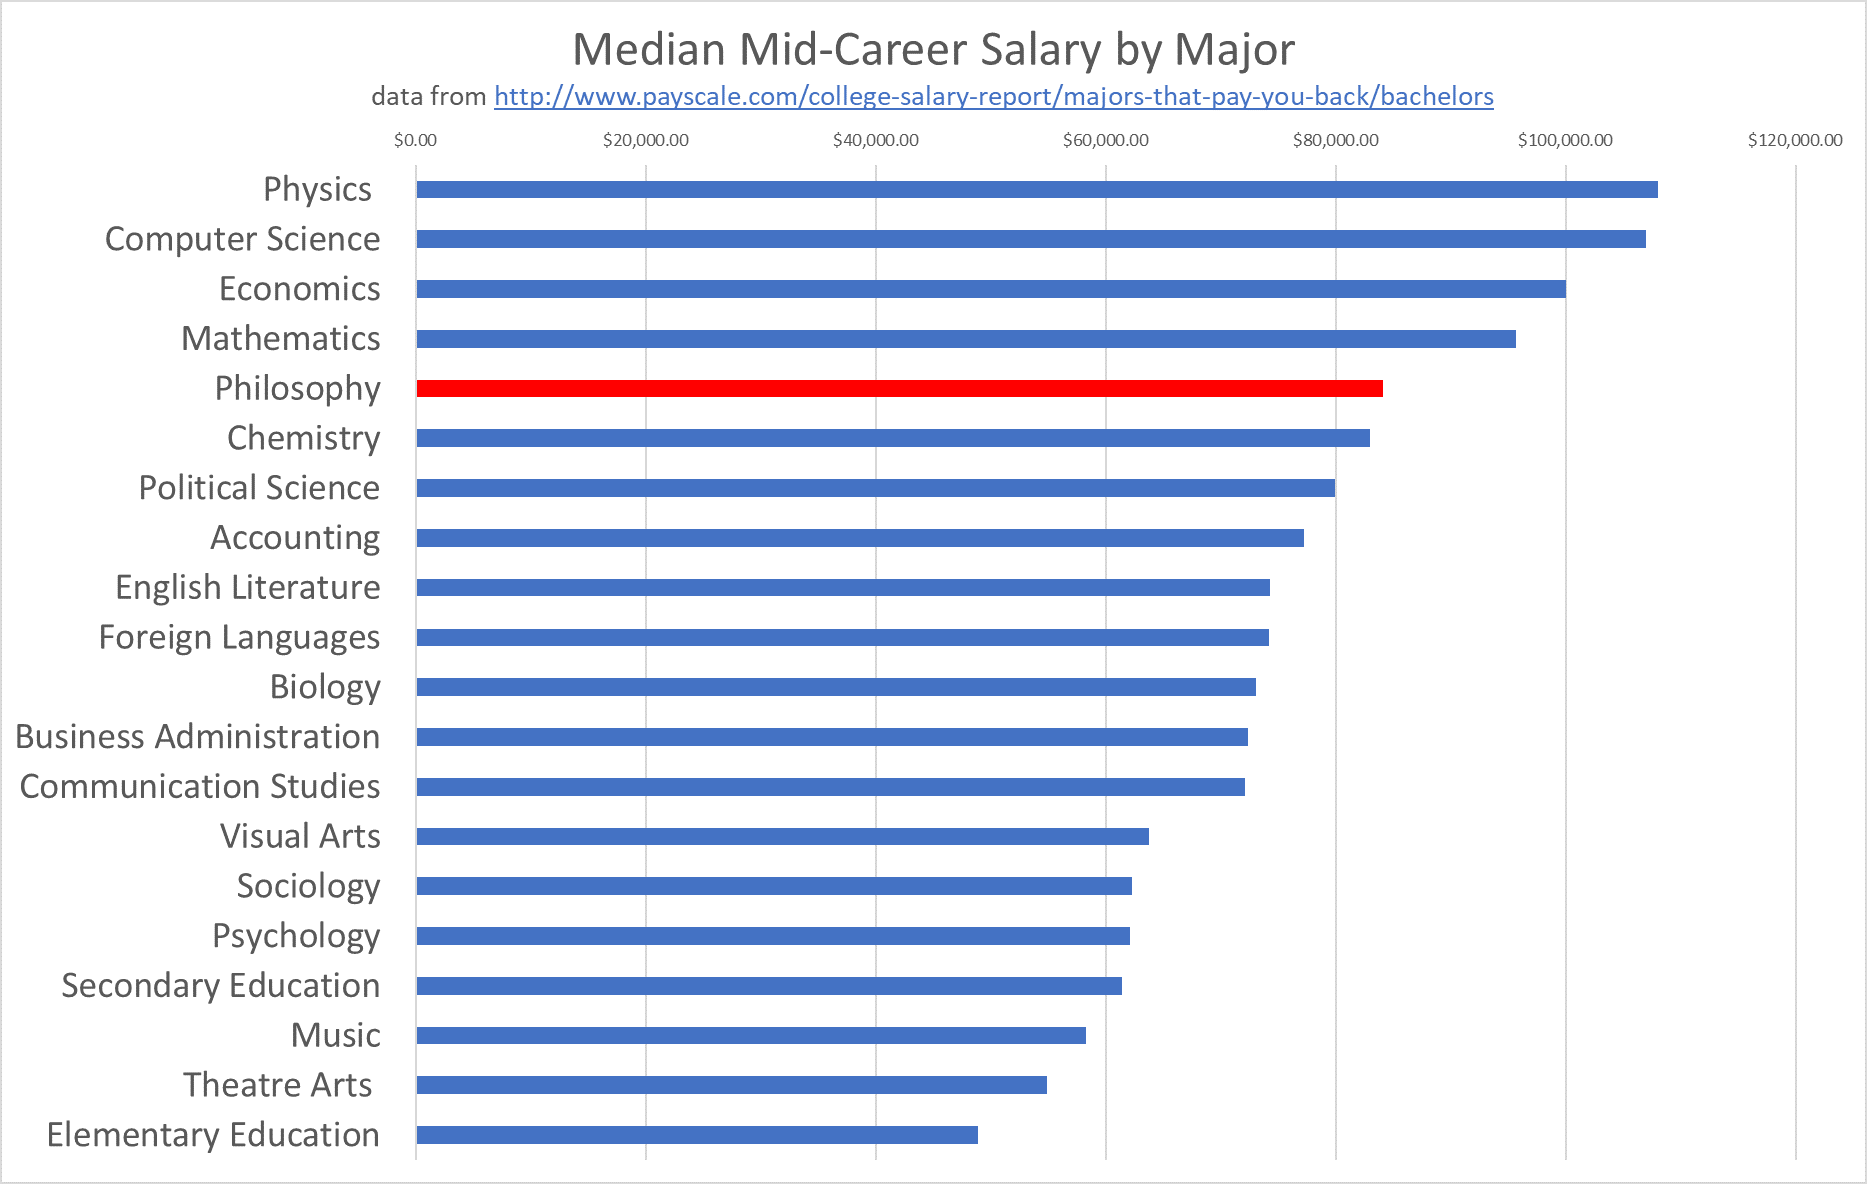 Median Mid-Career Salary